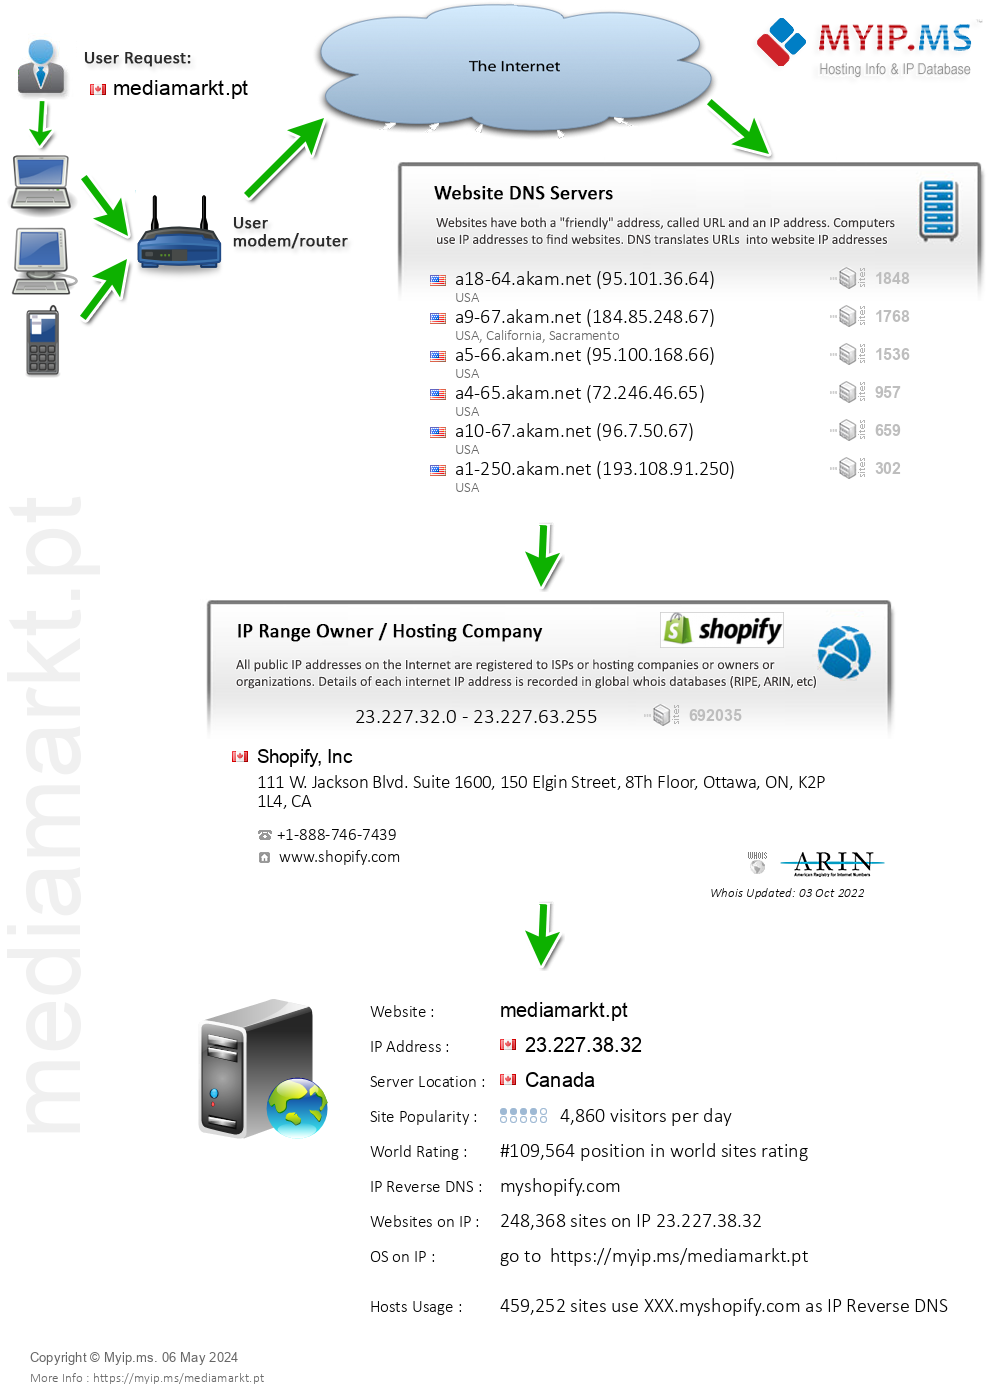 Mediamarkt.pt - Website Hosting Visual IP Diagram